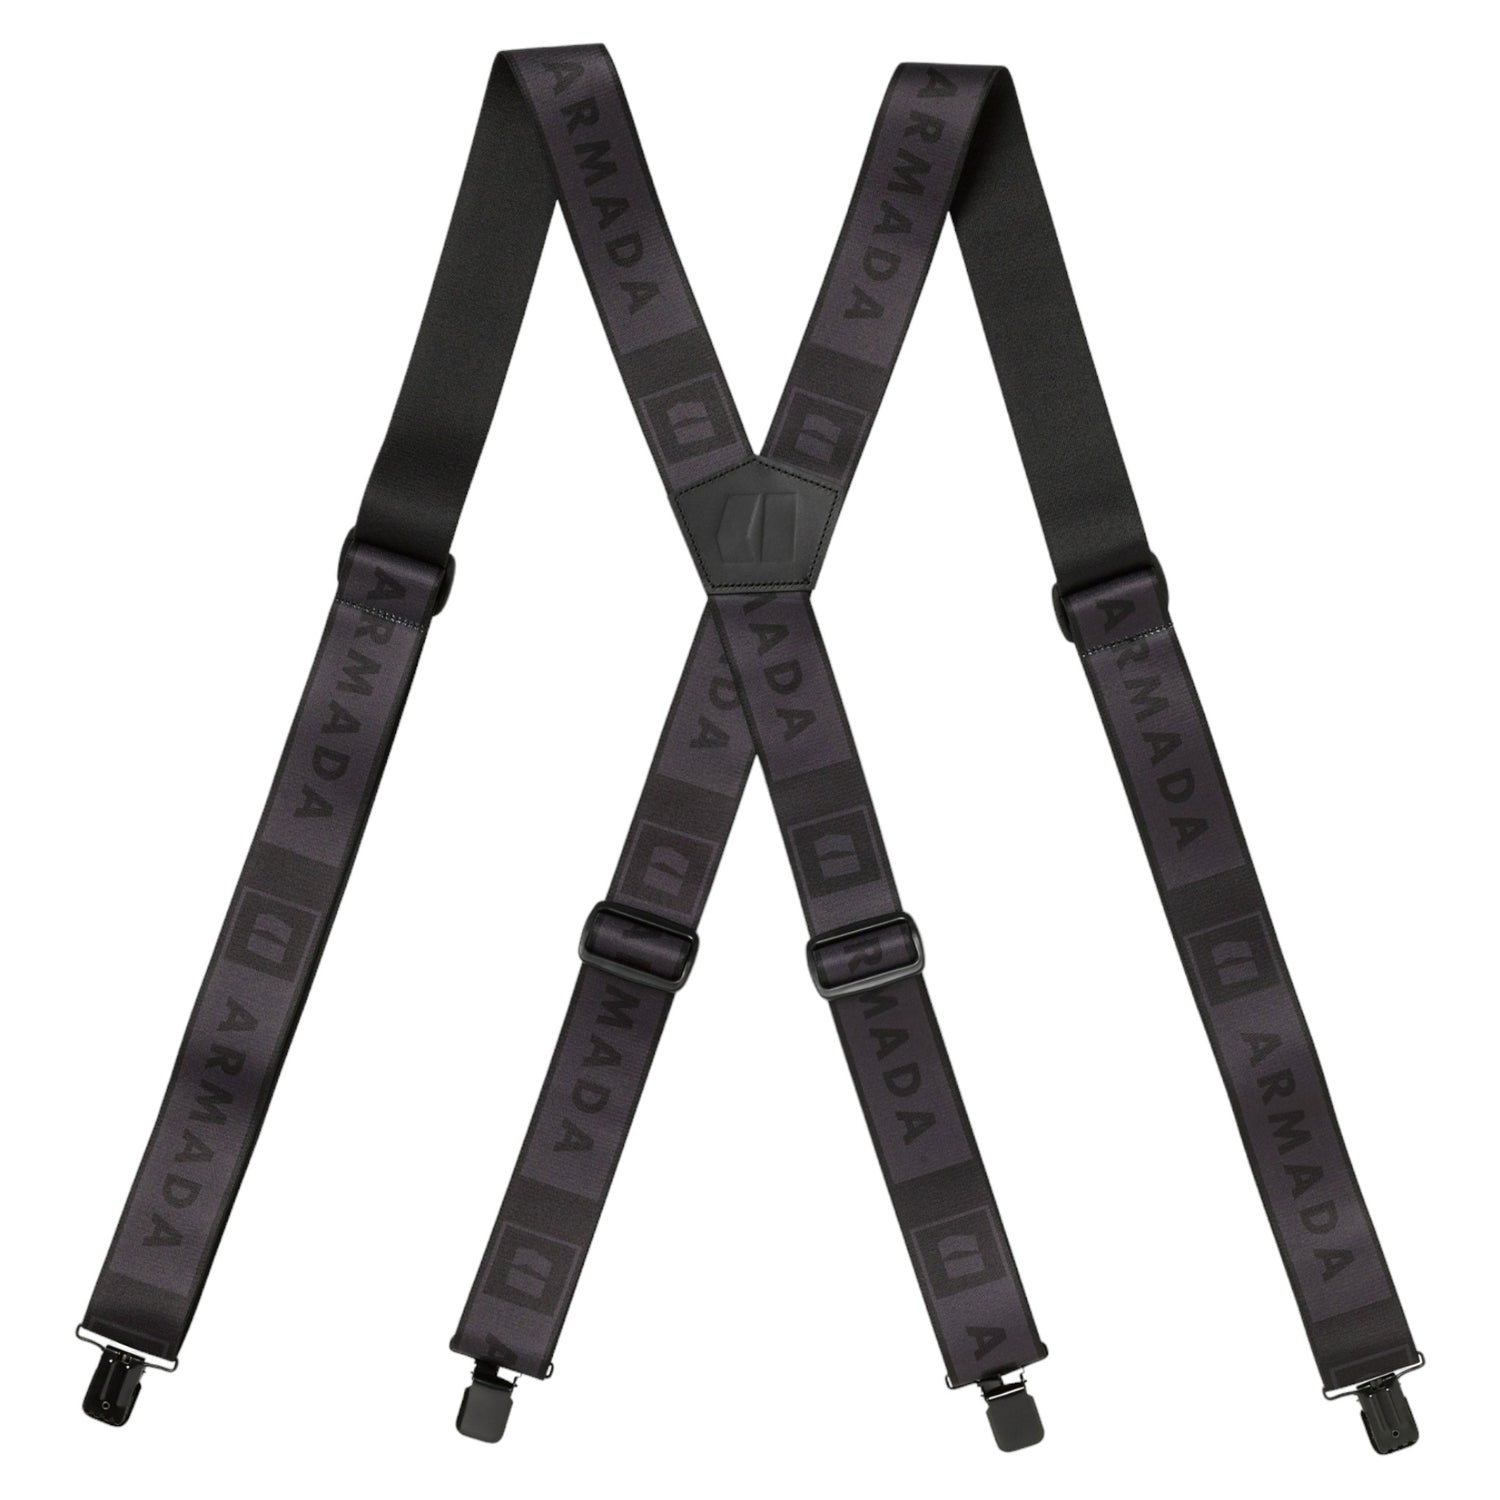 Armada - Stage - Bretelles de ski avec logo - Noir